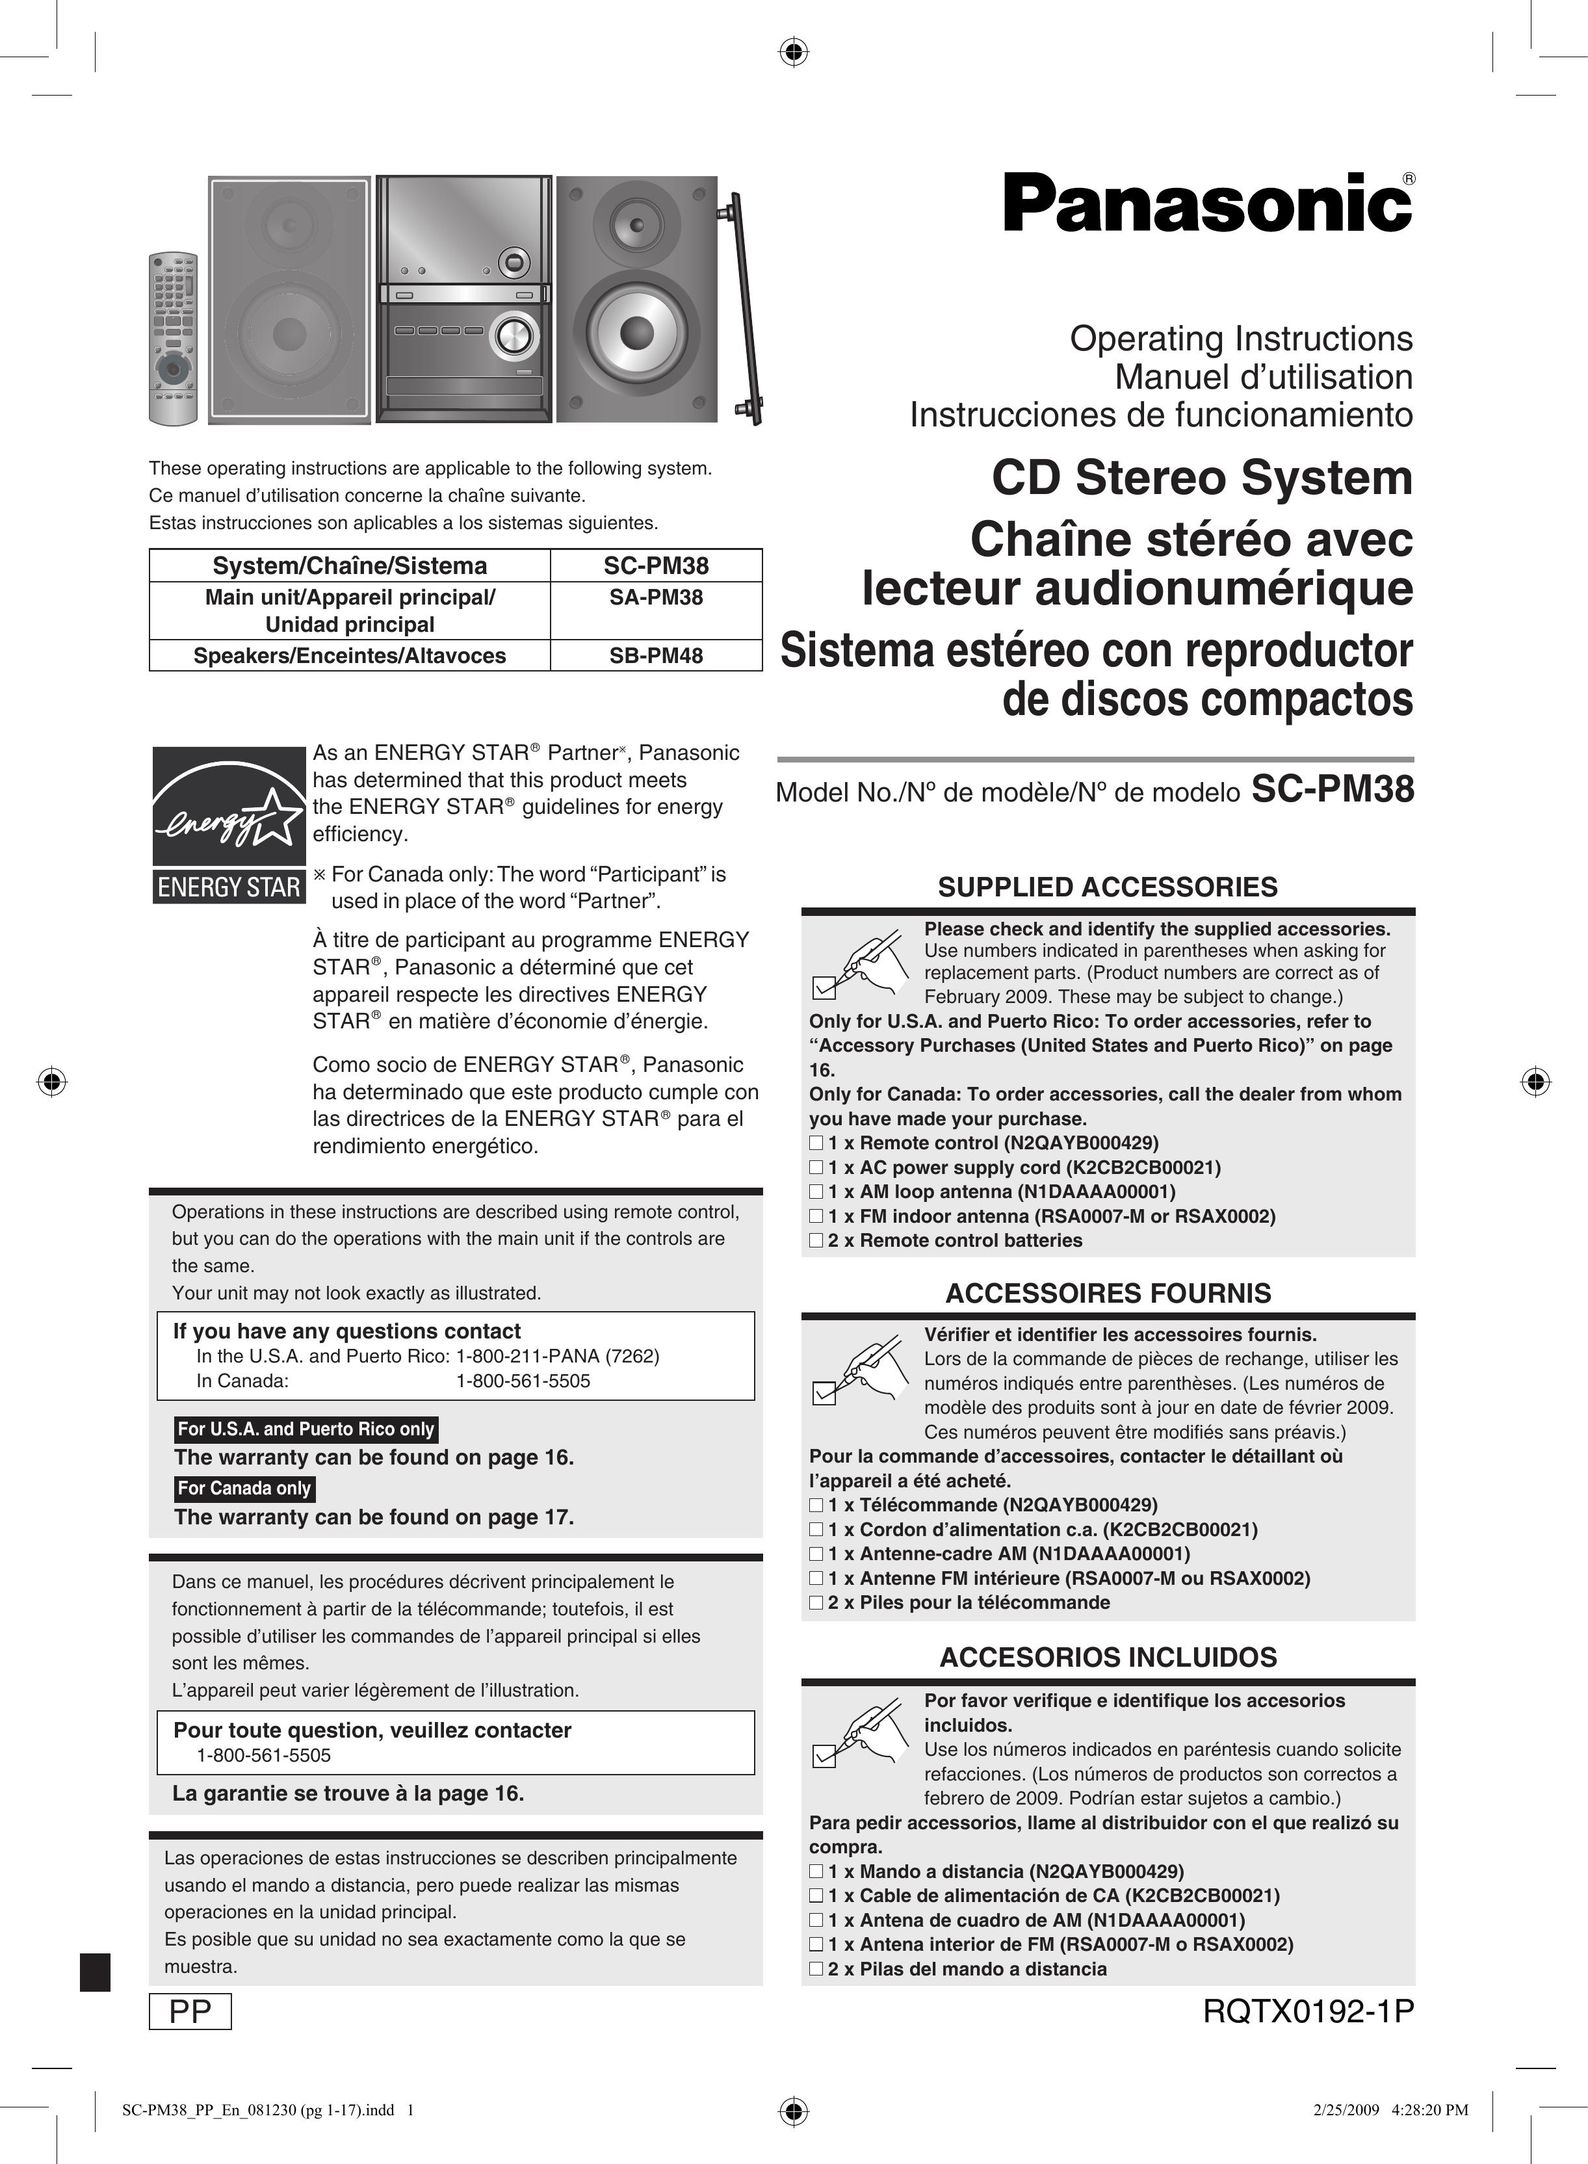 Panasonic SB-PM48 Stereo System User Manual